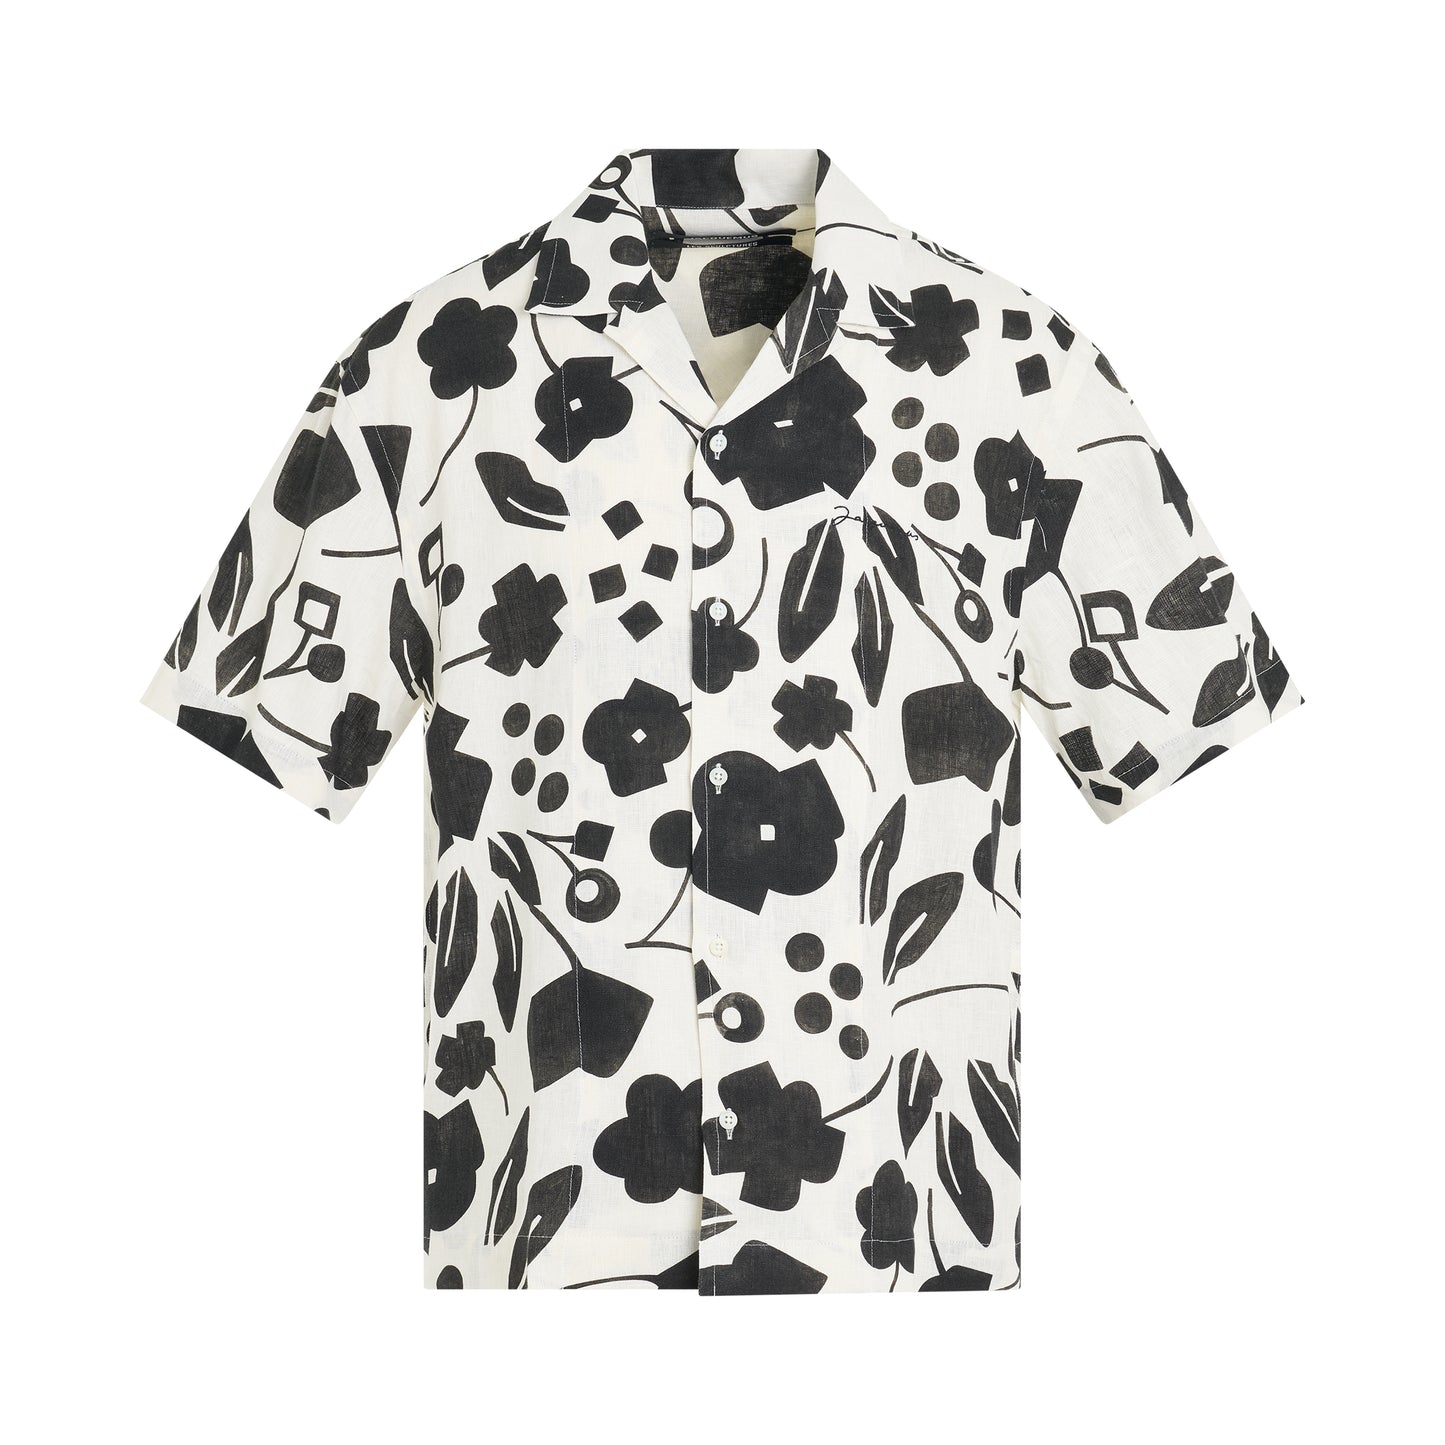 Jean Cubic Flower Print Short Sleeve Shirt in White/Black